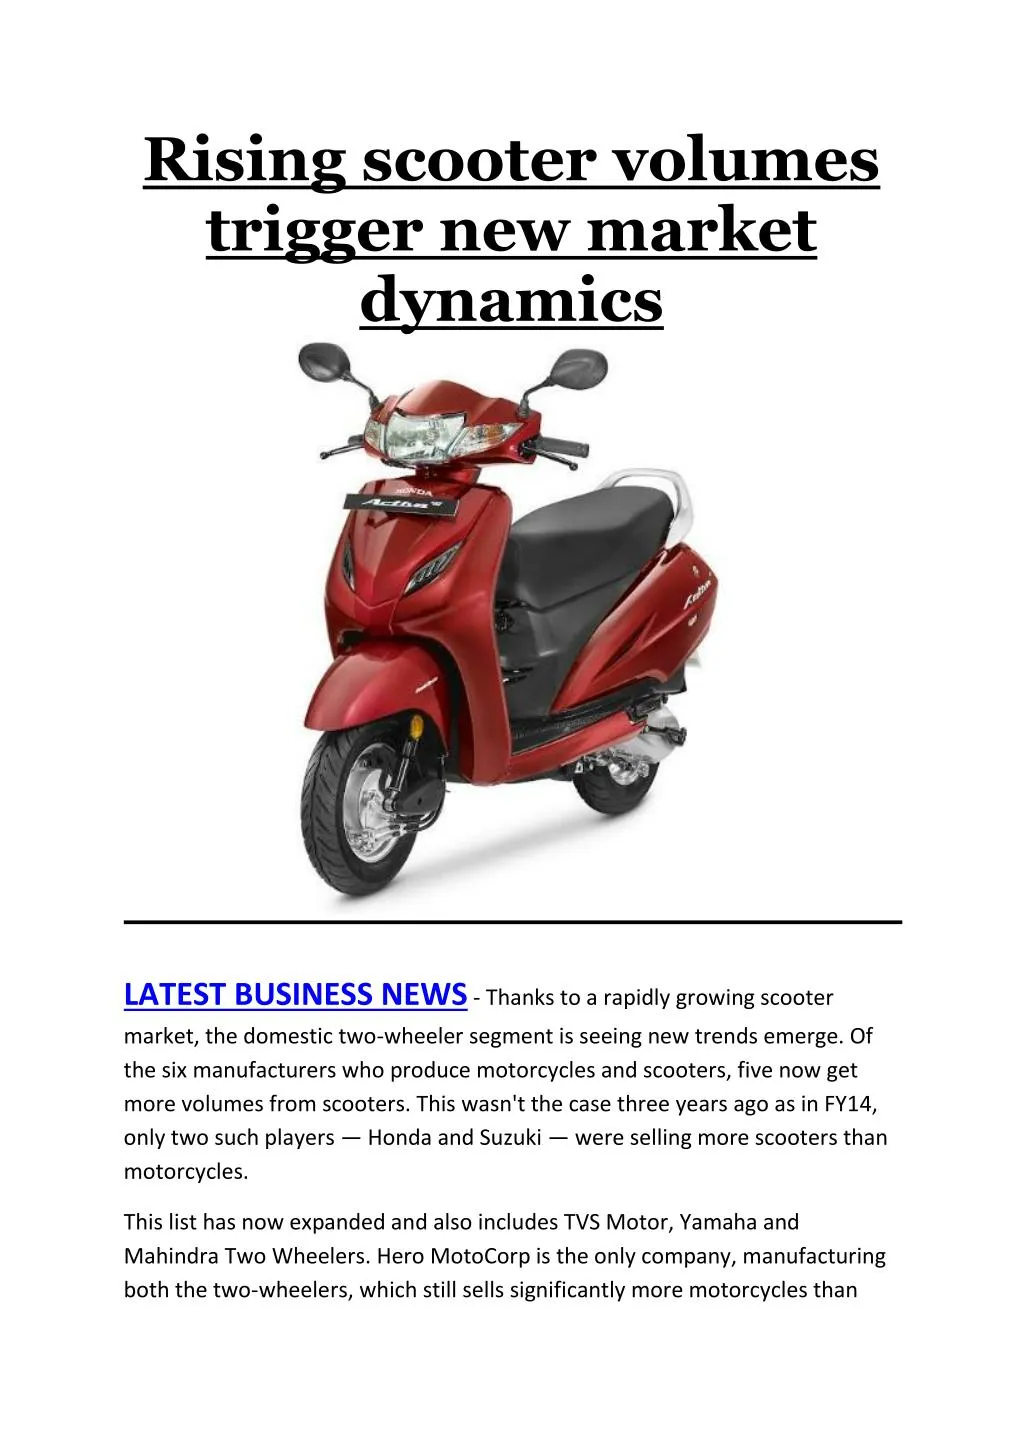 rising scooter volumes trigger new market dynamics